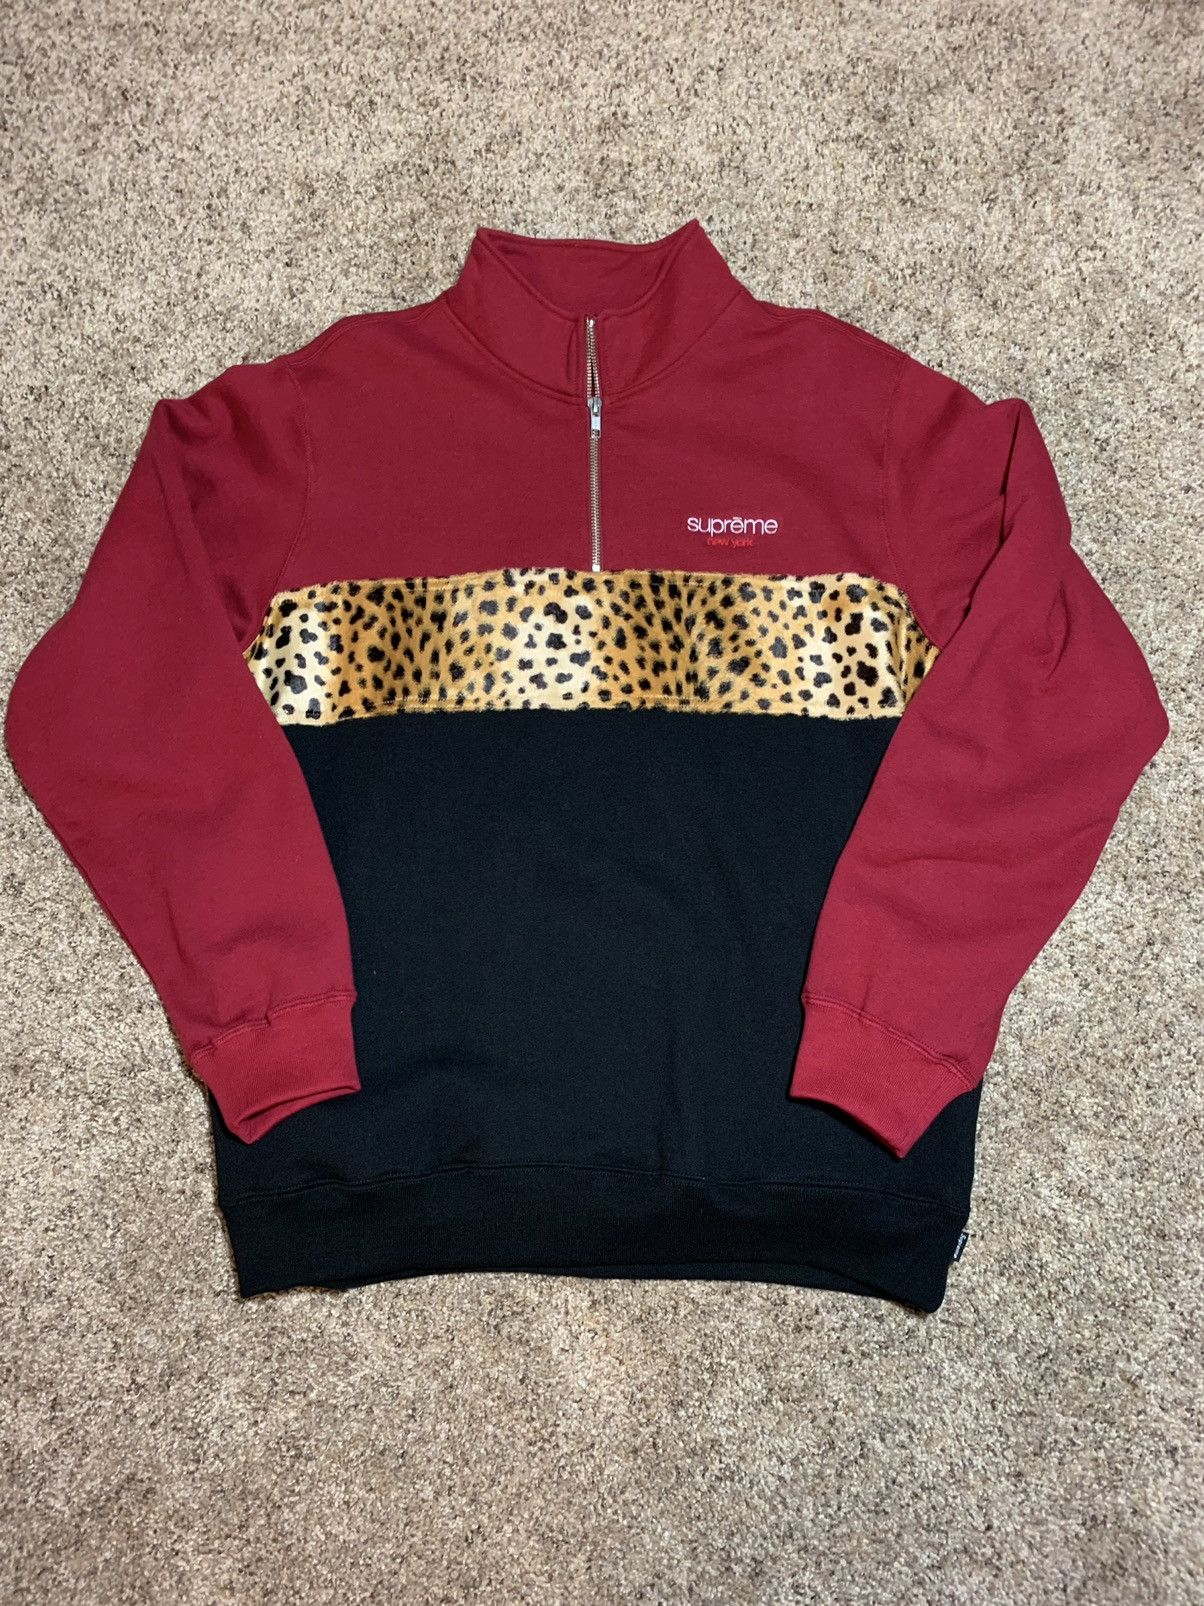 Supreme Supreme Leopard Panel Half Zip Sweatshirt | Grailed